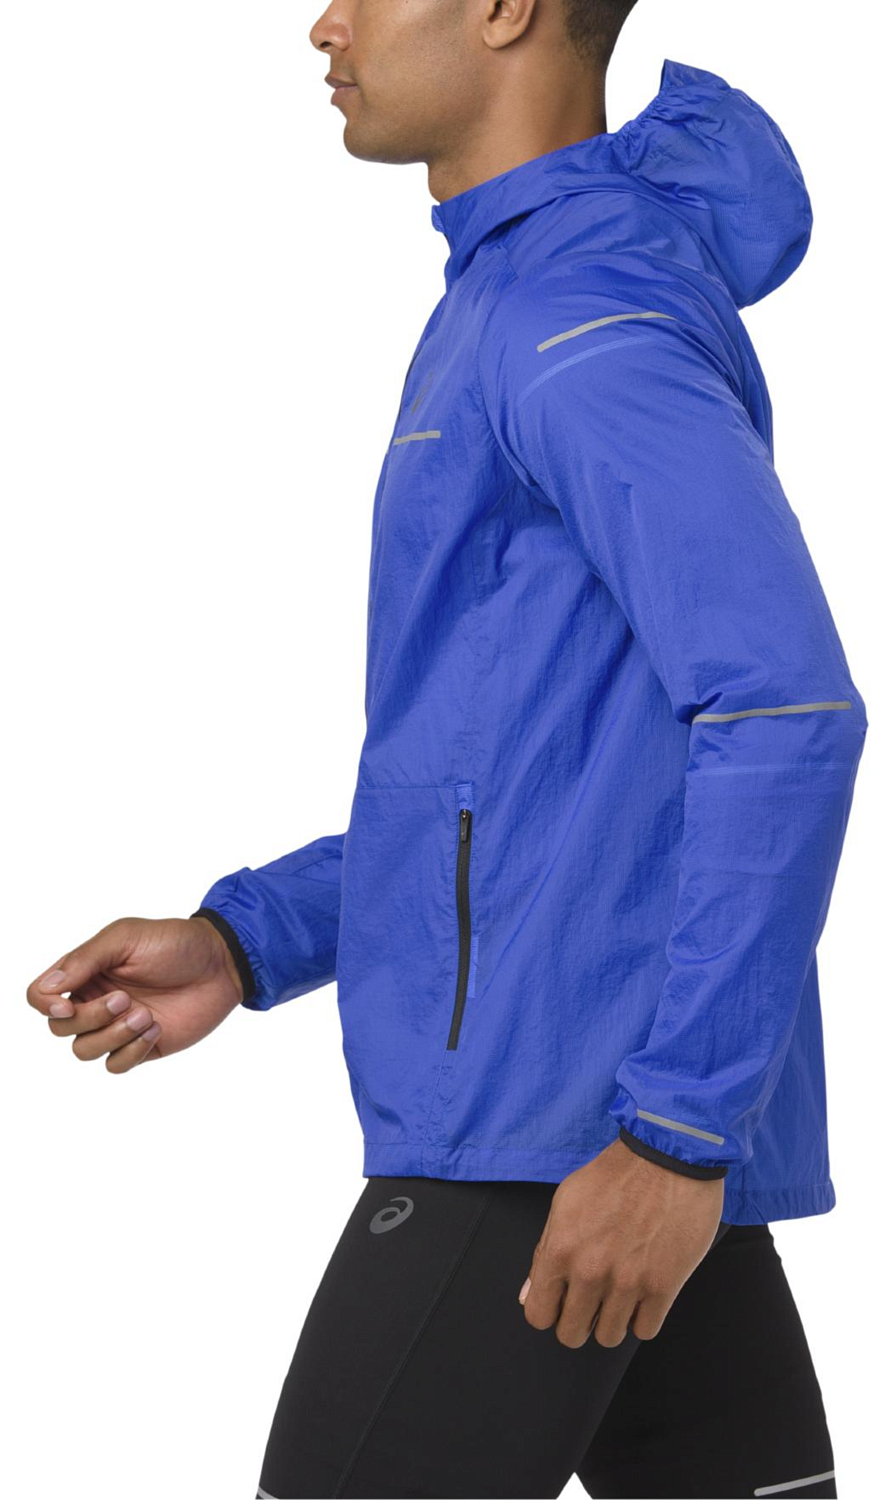 Куртка беговая Asics 2019 Lite/Snow Jacket Illusion Blue